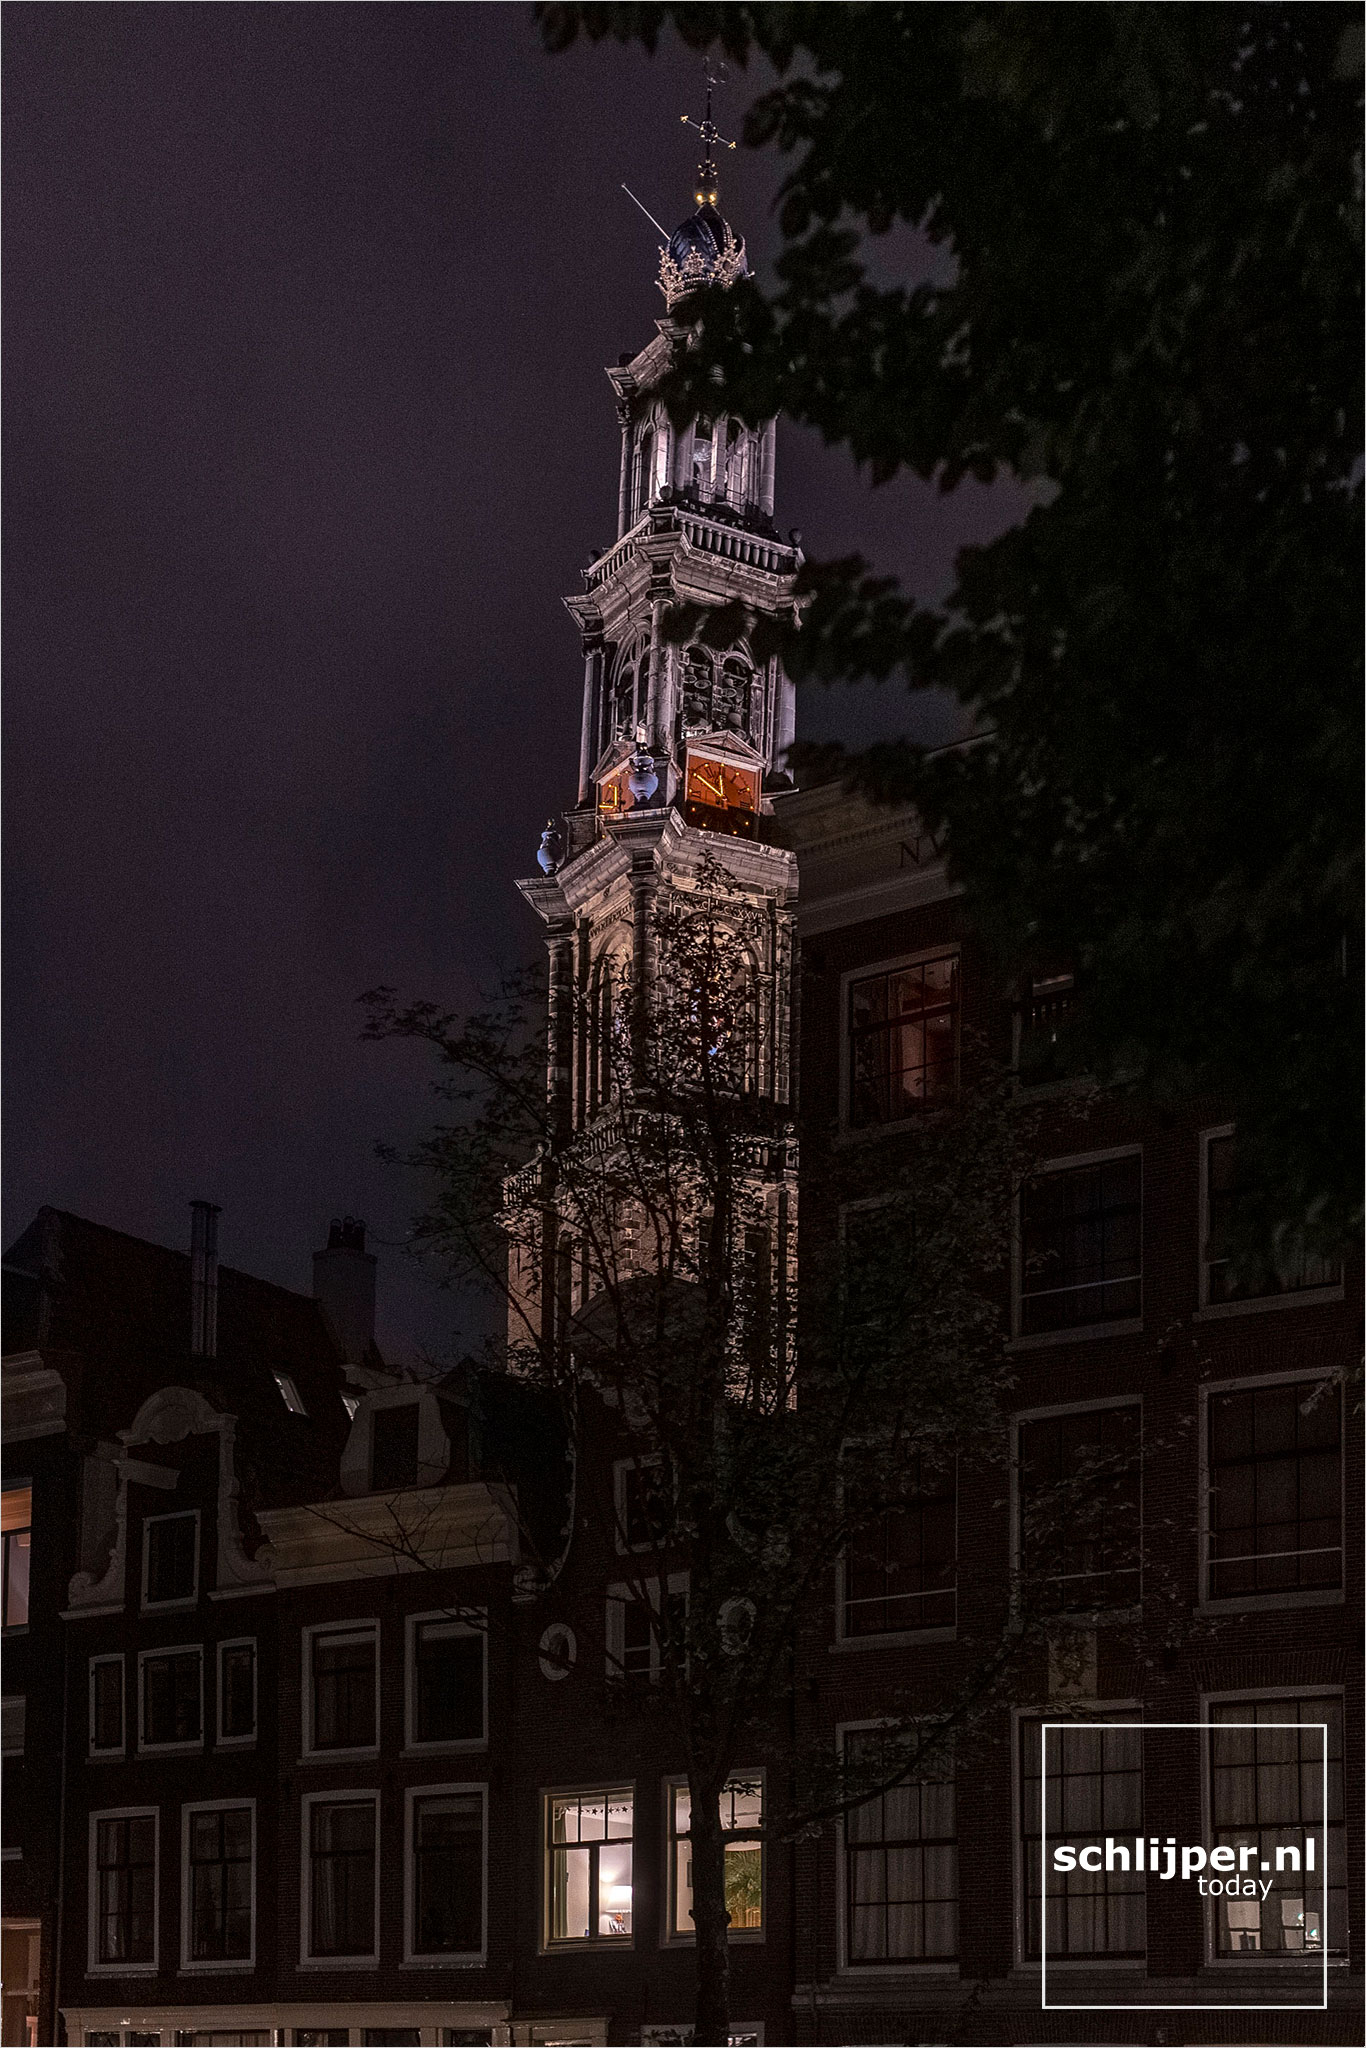 The Netherlands, Amsterdam, 28 augustus 2021